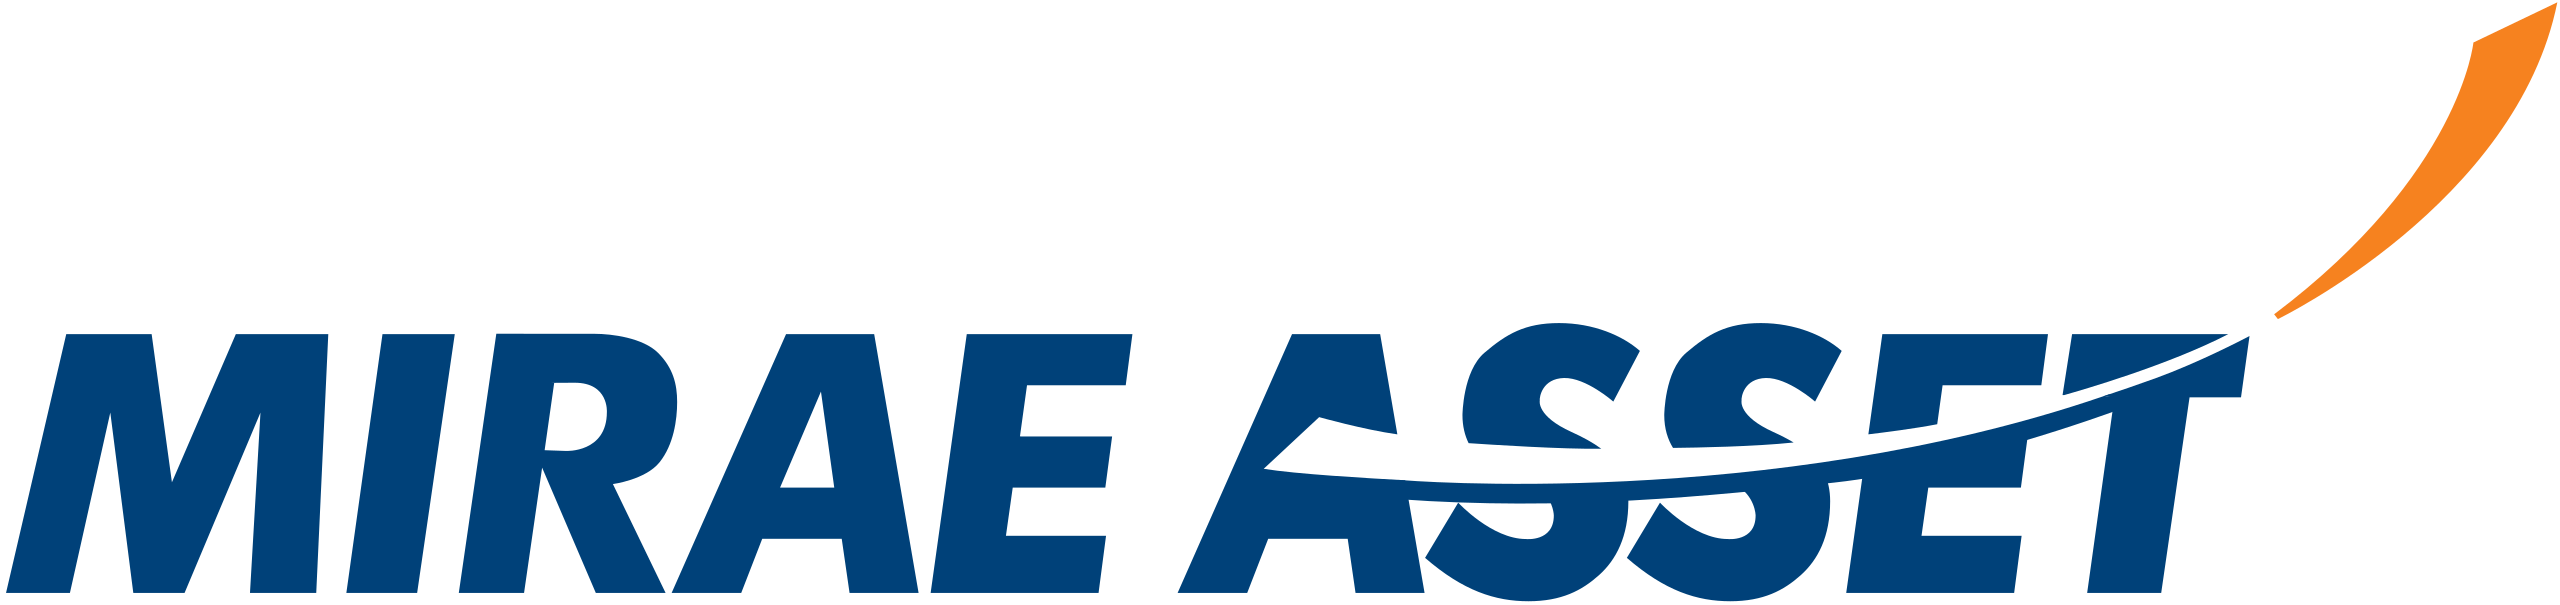 Mirae Asset Life Insurance Co Brand Logo